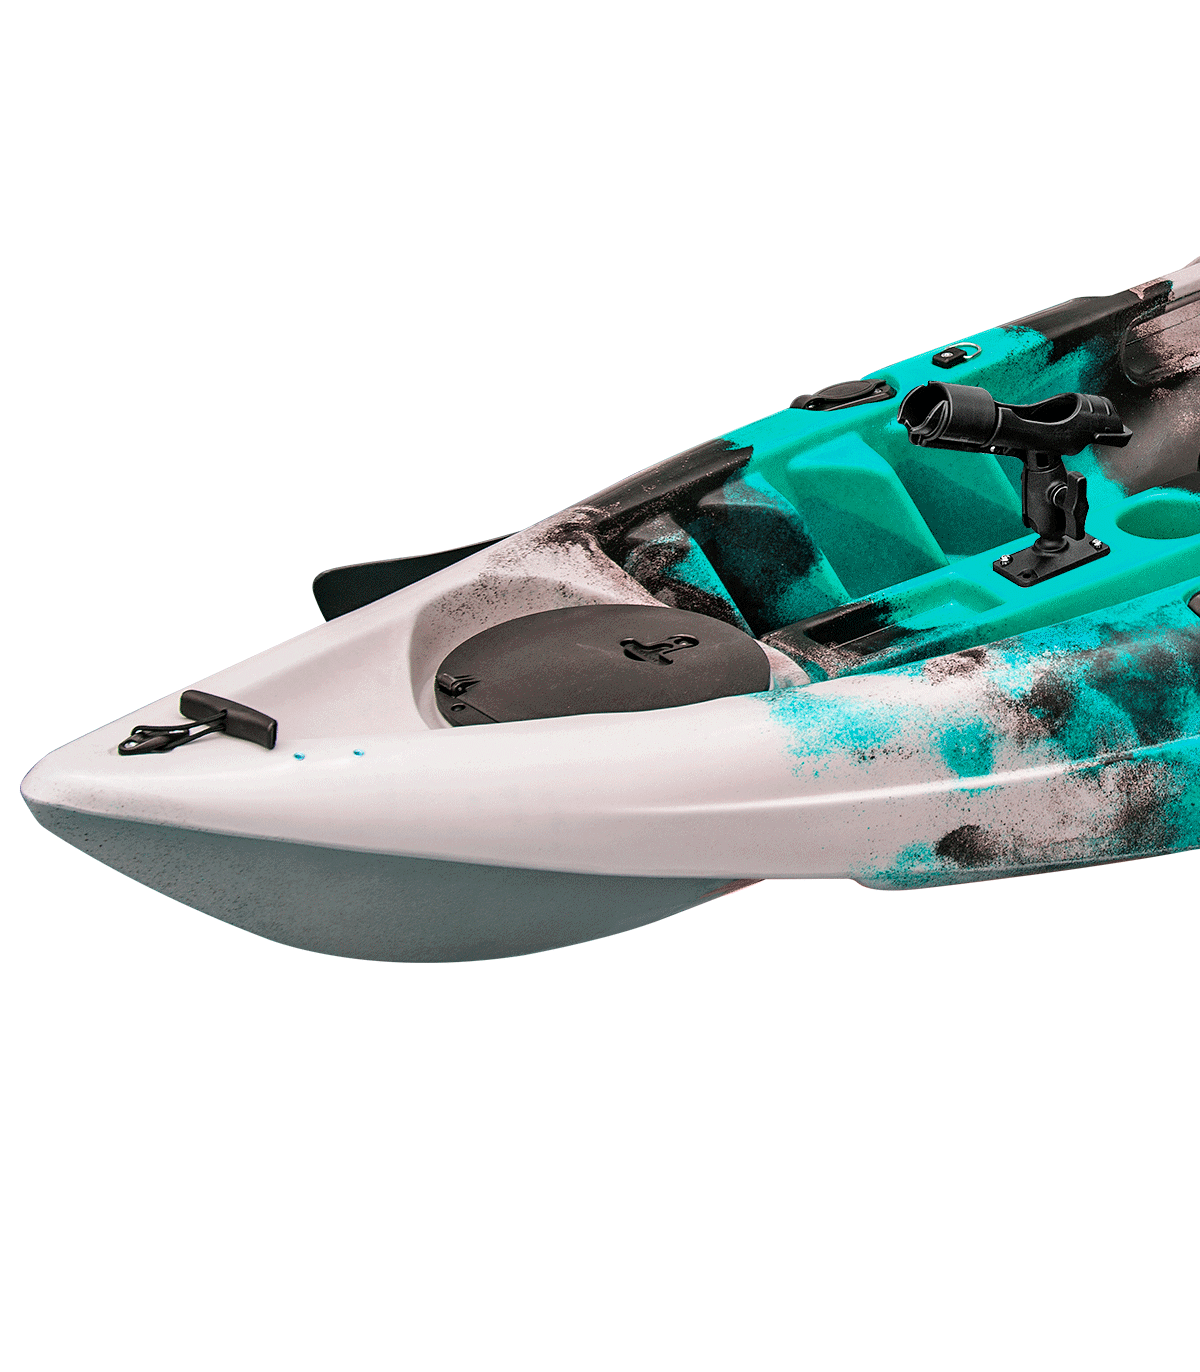 Kayak De Pesca Kol Outdoor Conger P Lite (280x82cm)  MKP